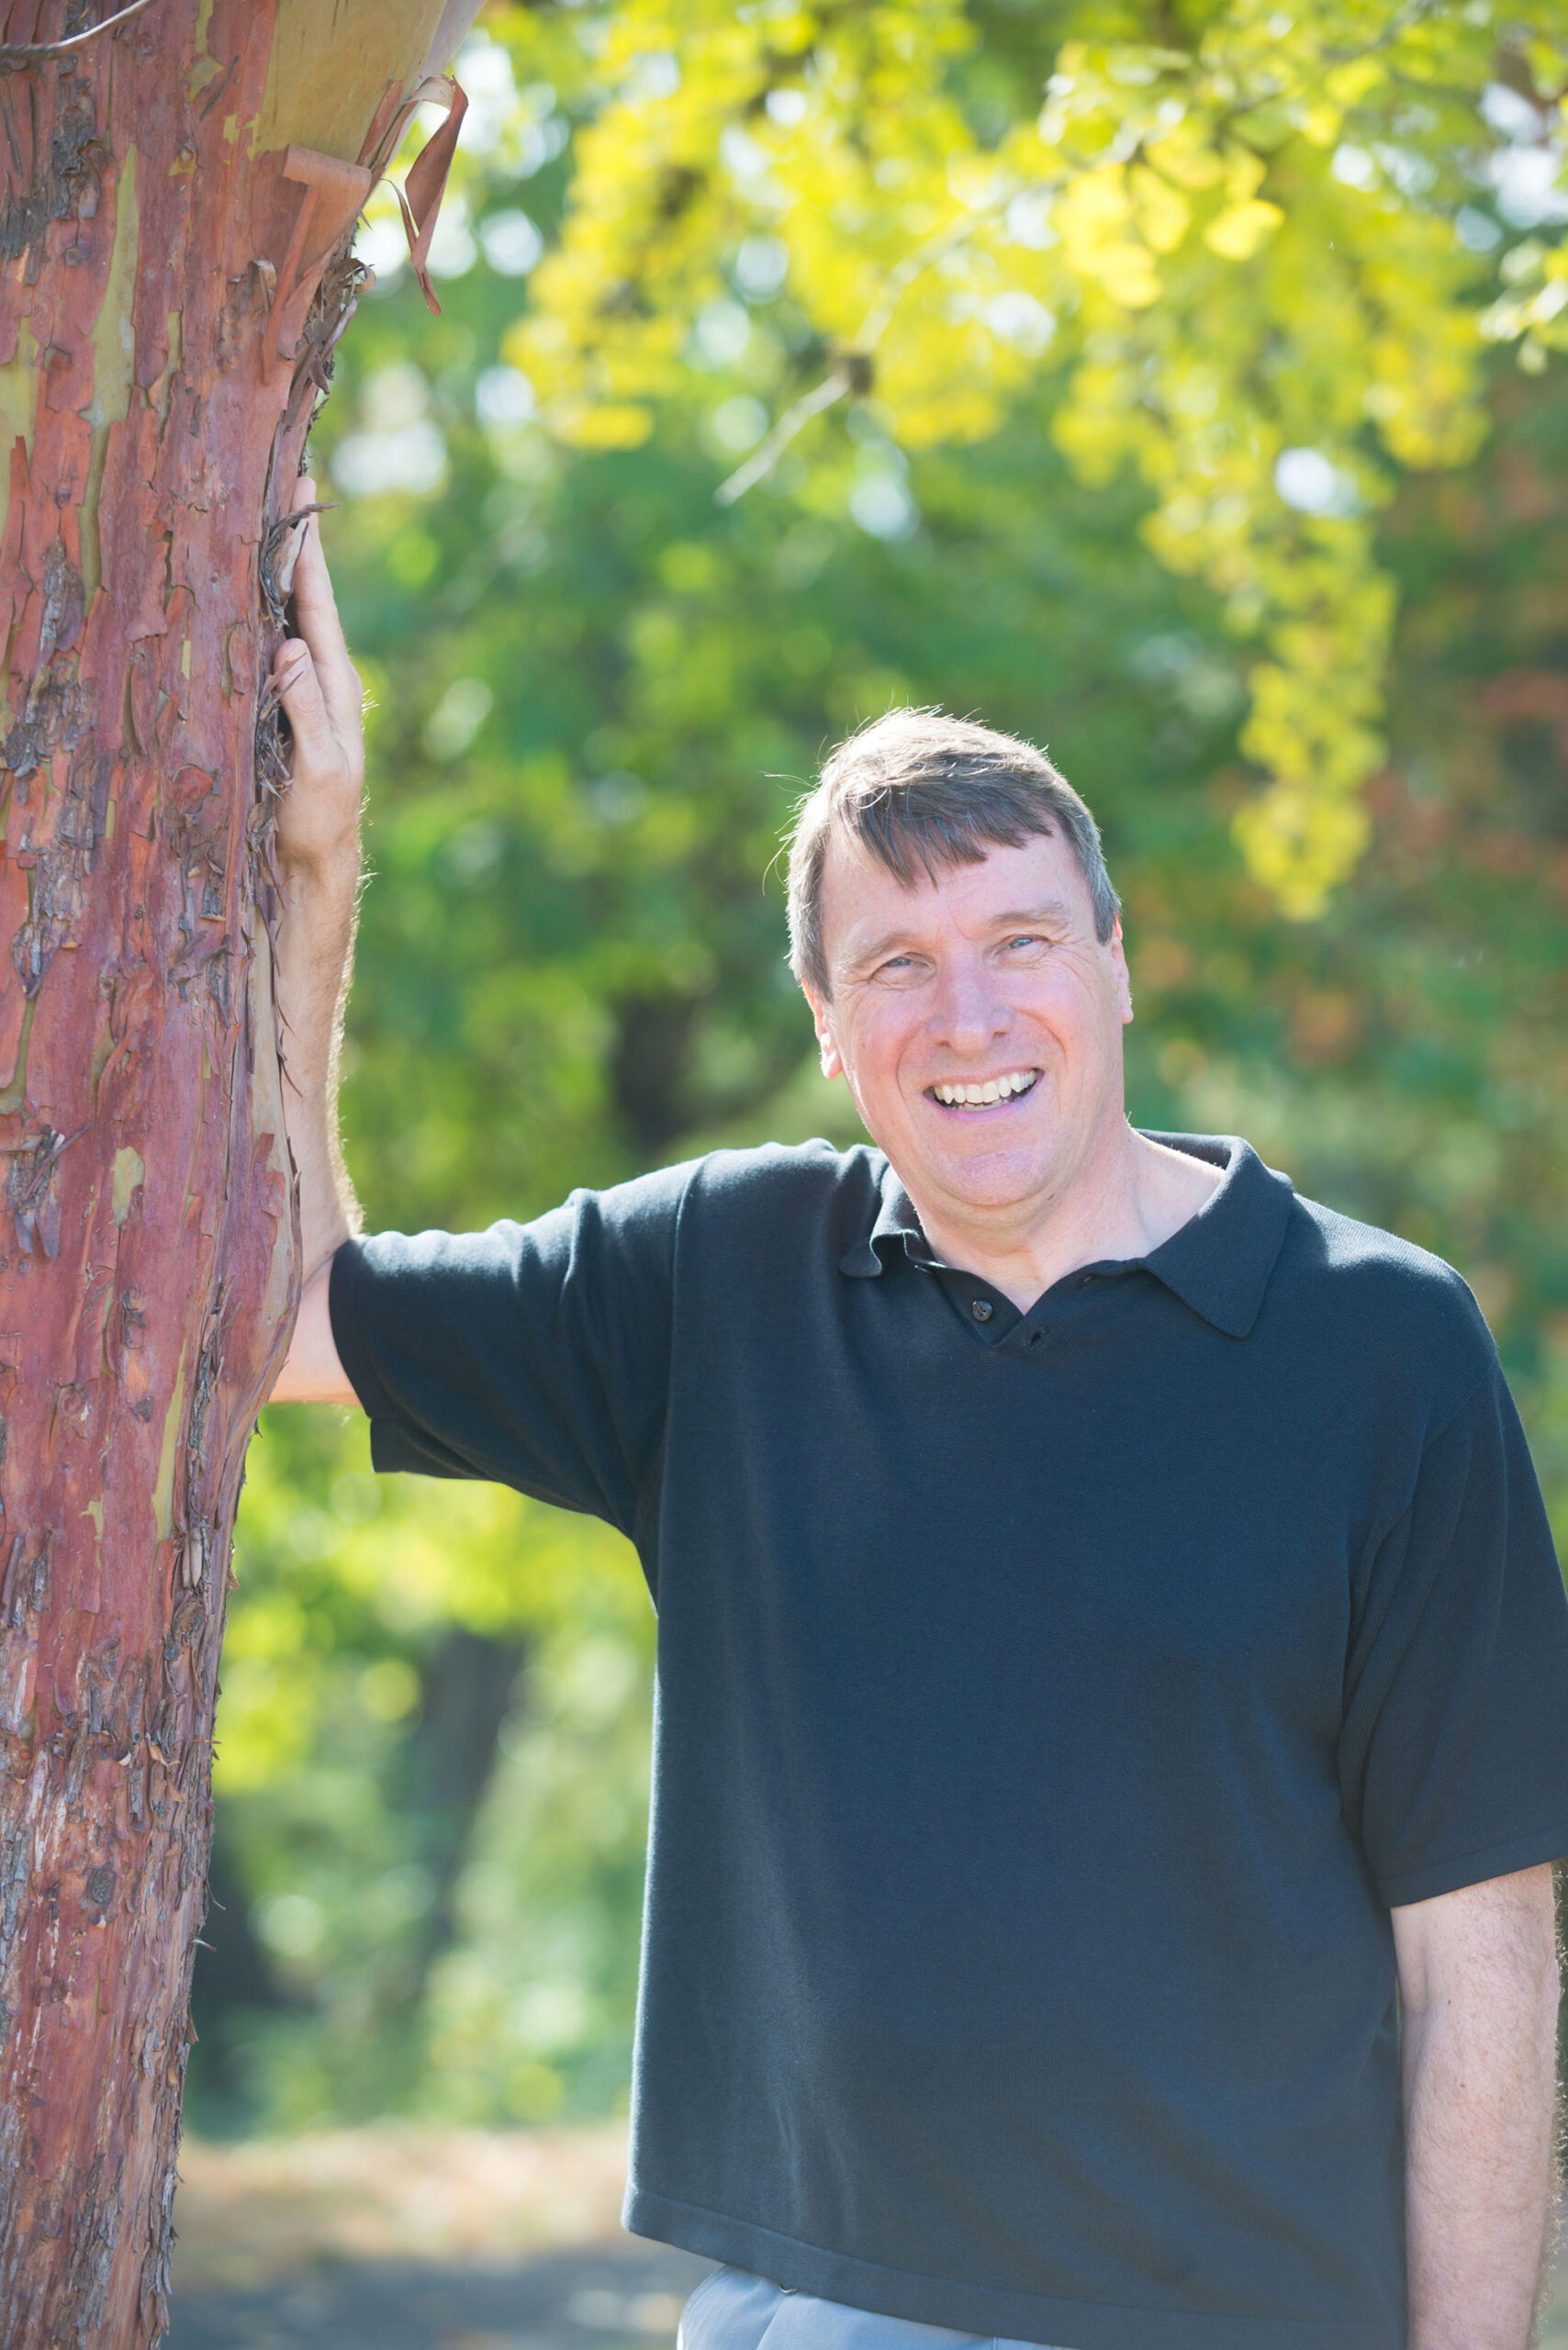 Man in black polo shirt smiling, next to tree